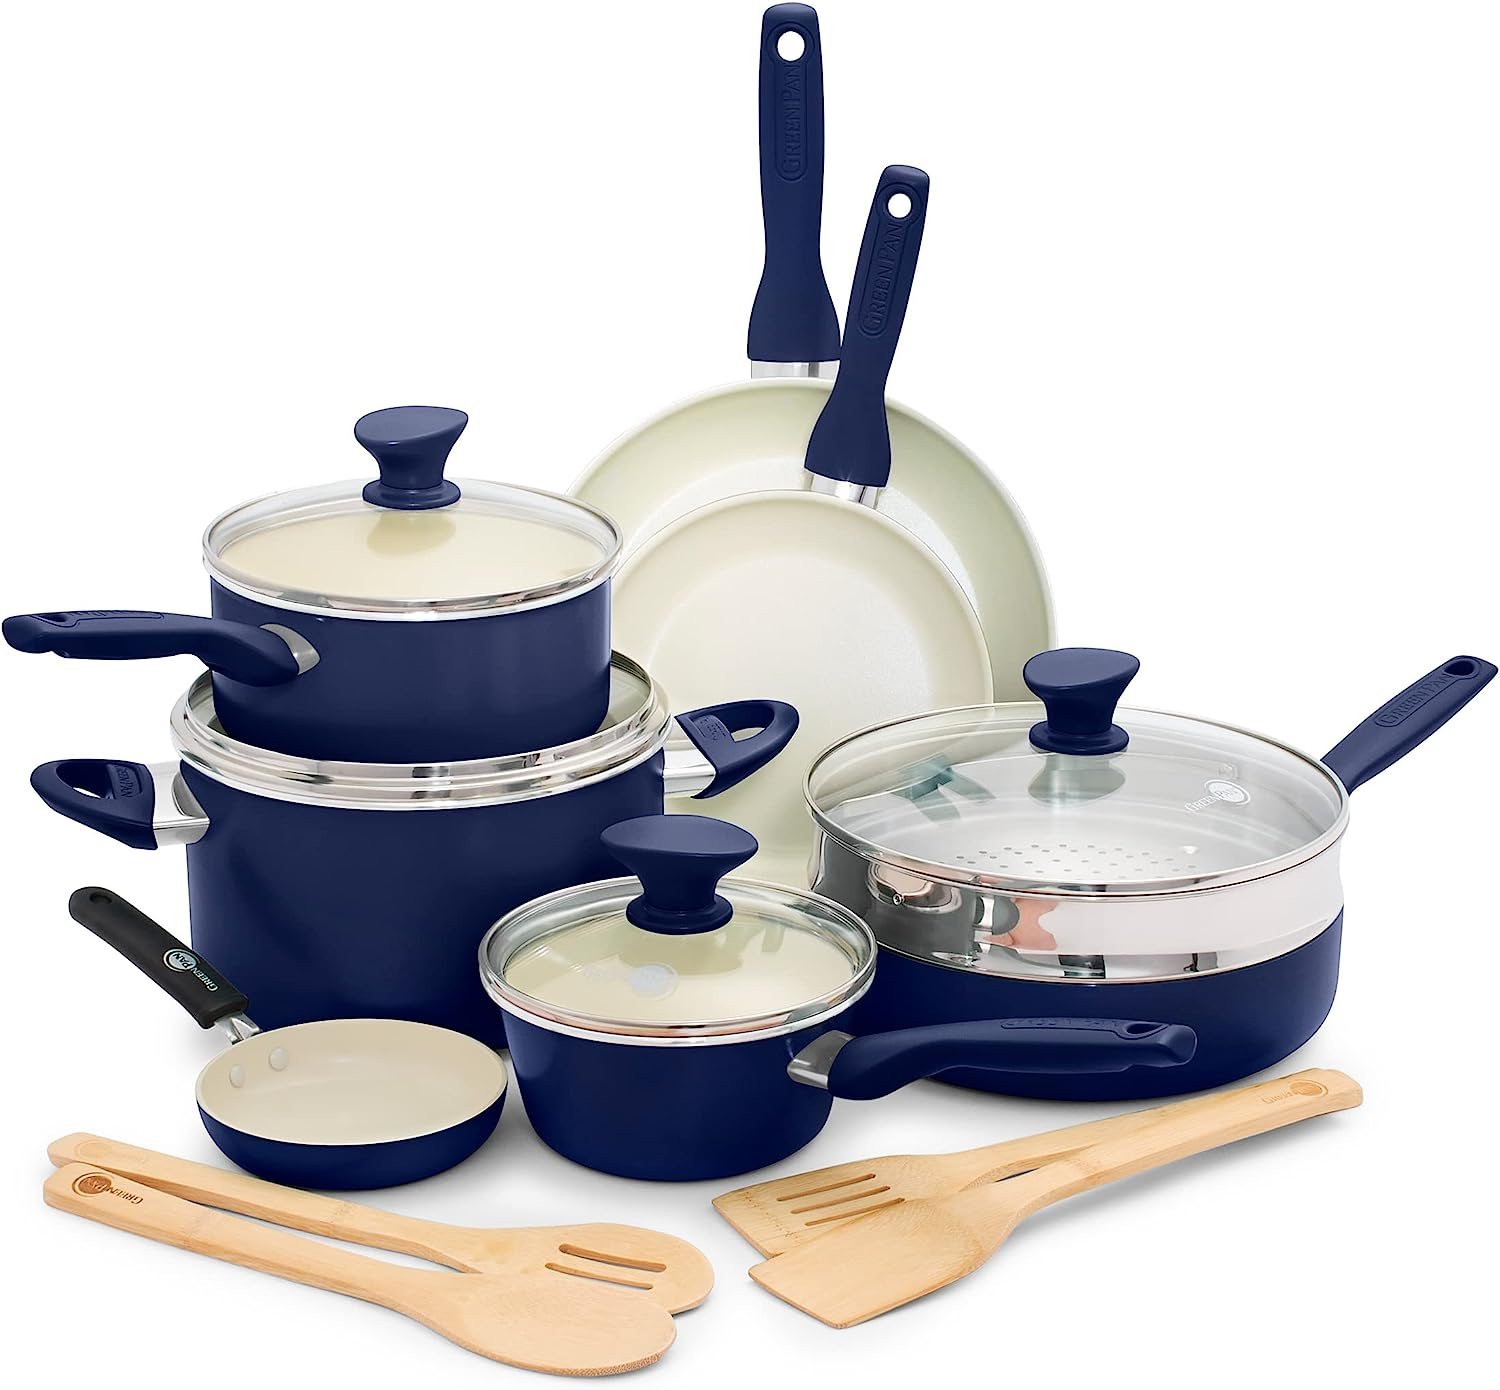 https://cdn.bestreviews.com/images/v4desktop/product-matrix/best-healthy-cookware-greenpan-rio-nonstick-non-toxic-pfas-free-dishwasher-safe-pots-pans.jpg